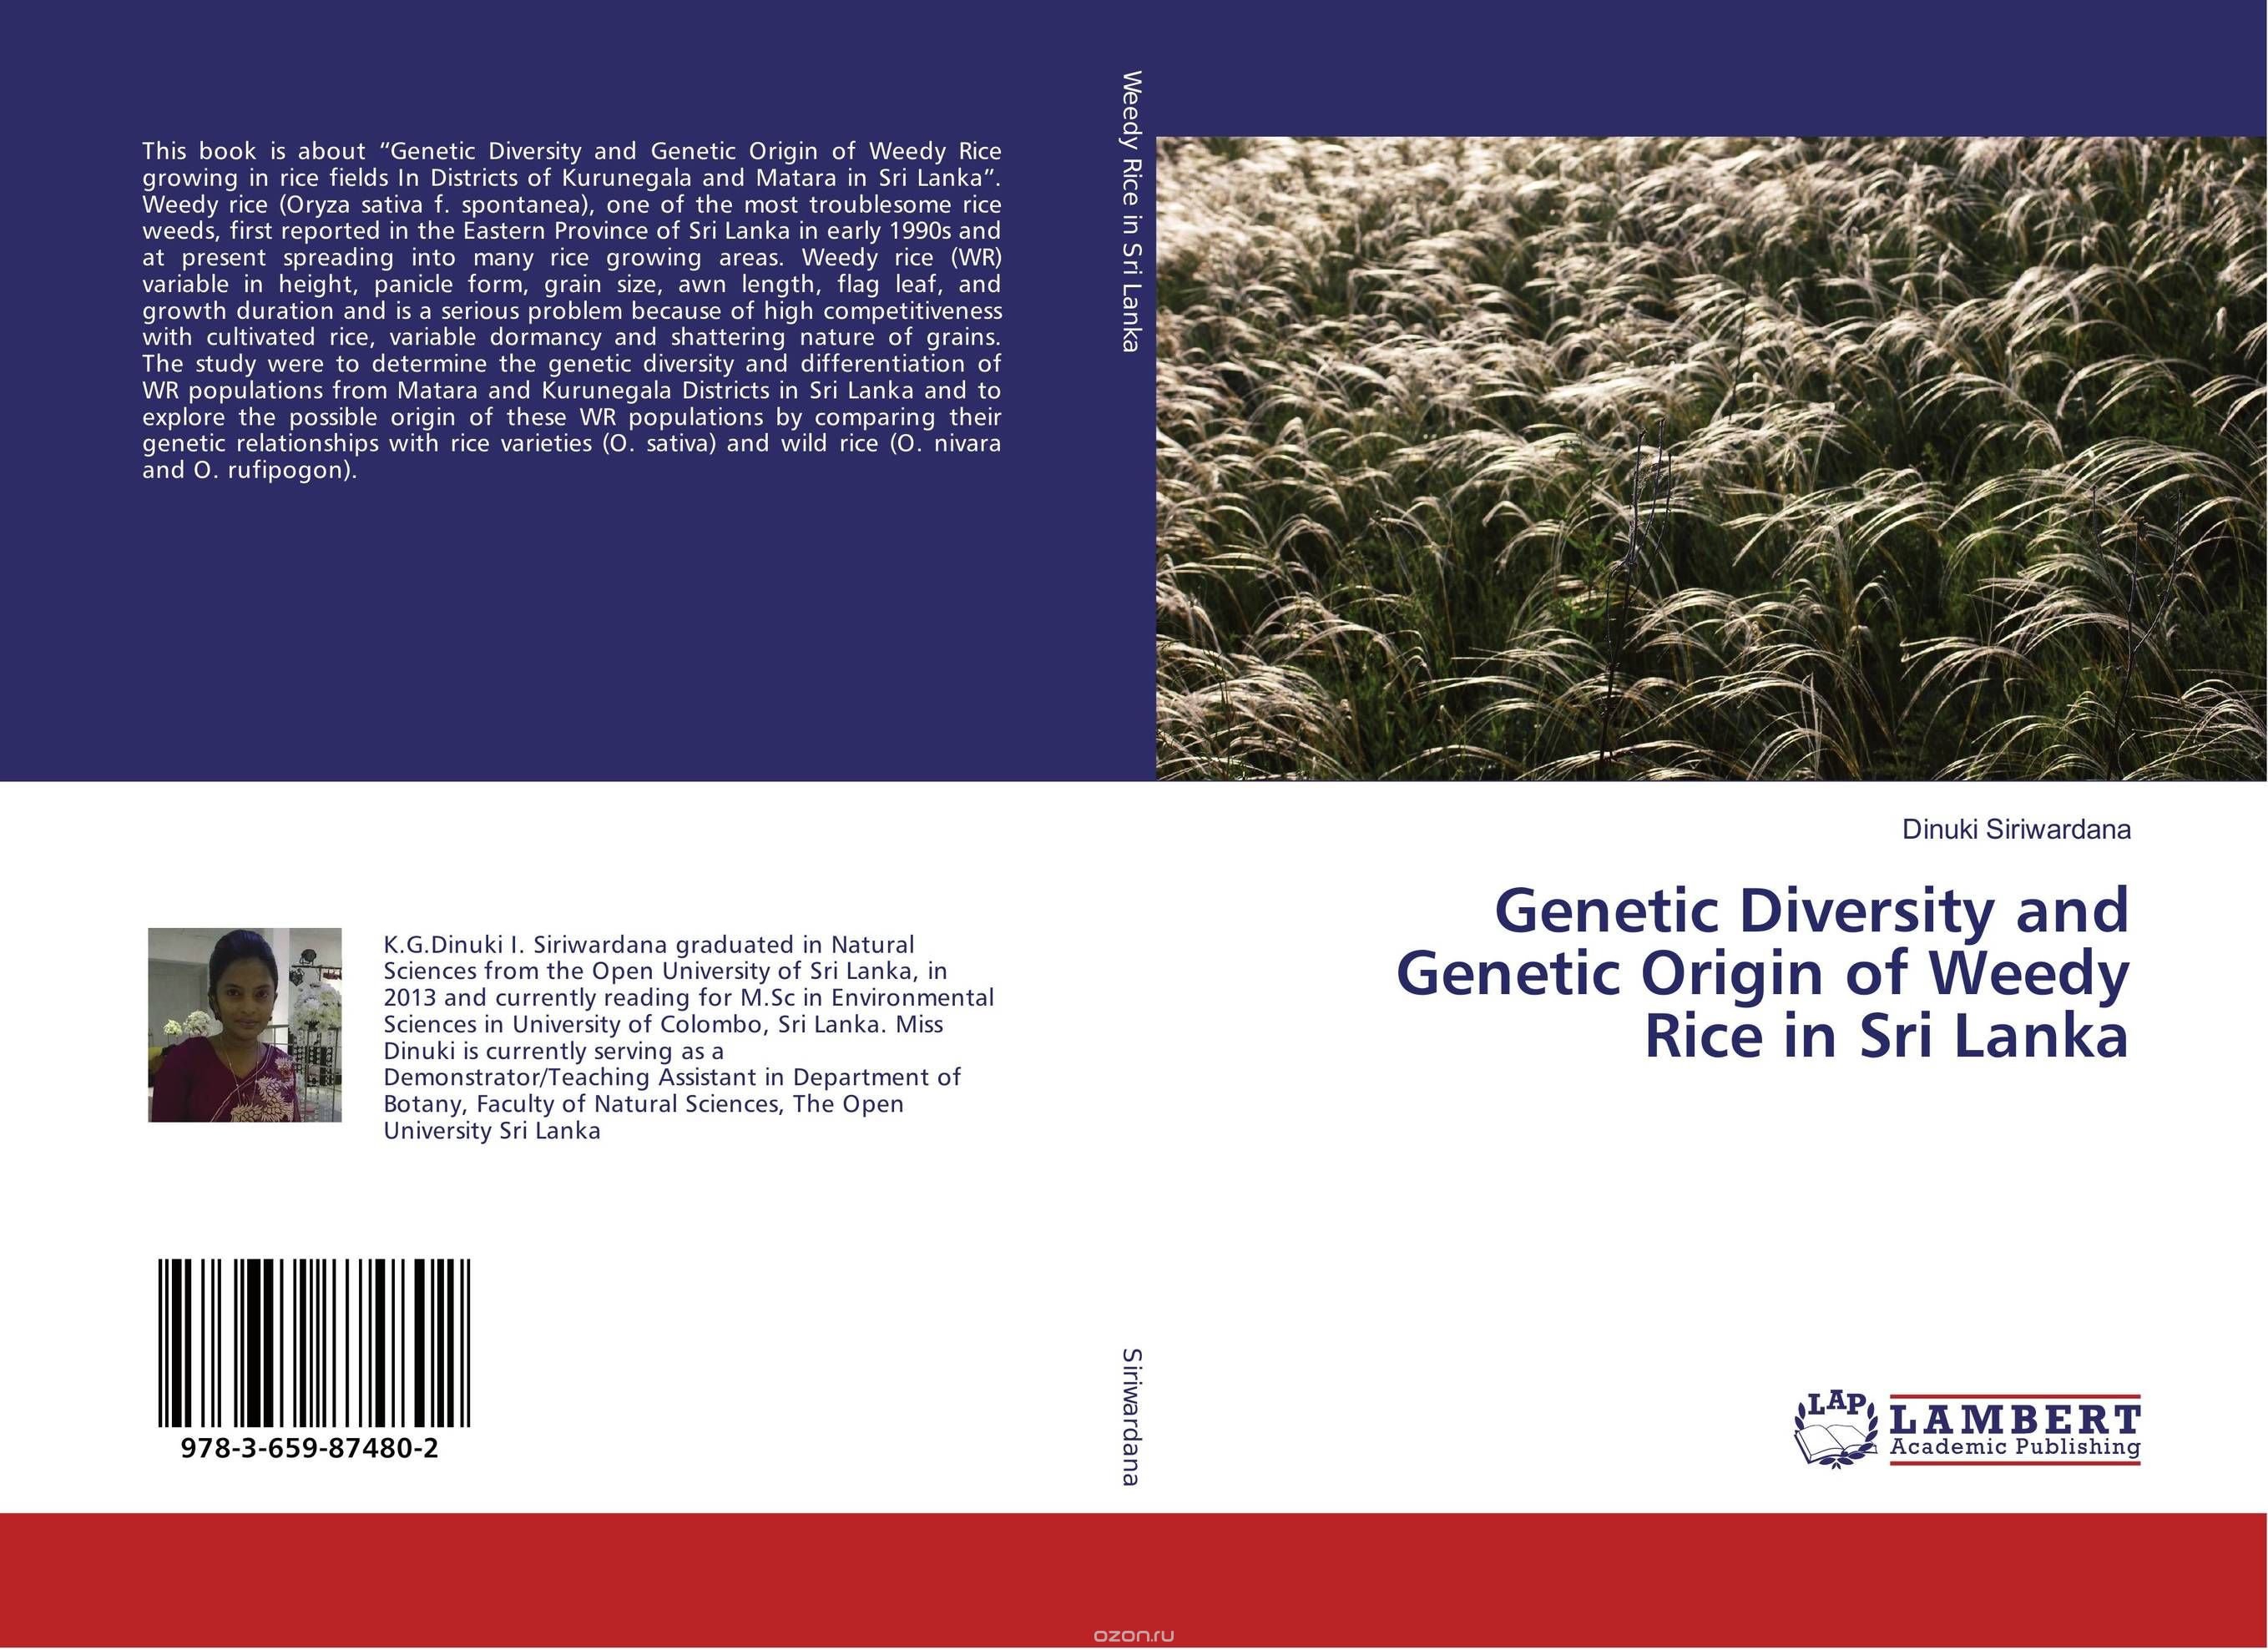 Genetic Diversity and Genetic Origin of Weedy Rice in Sri Lanka